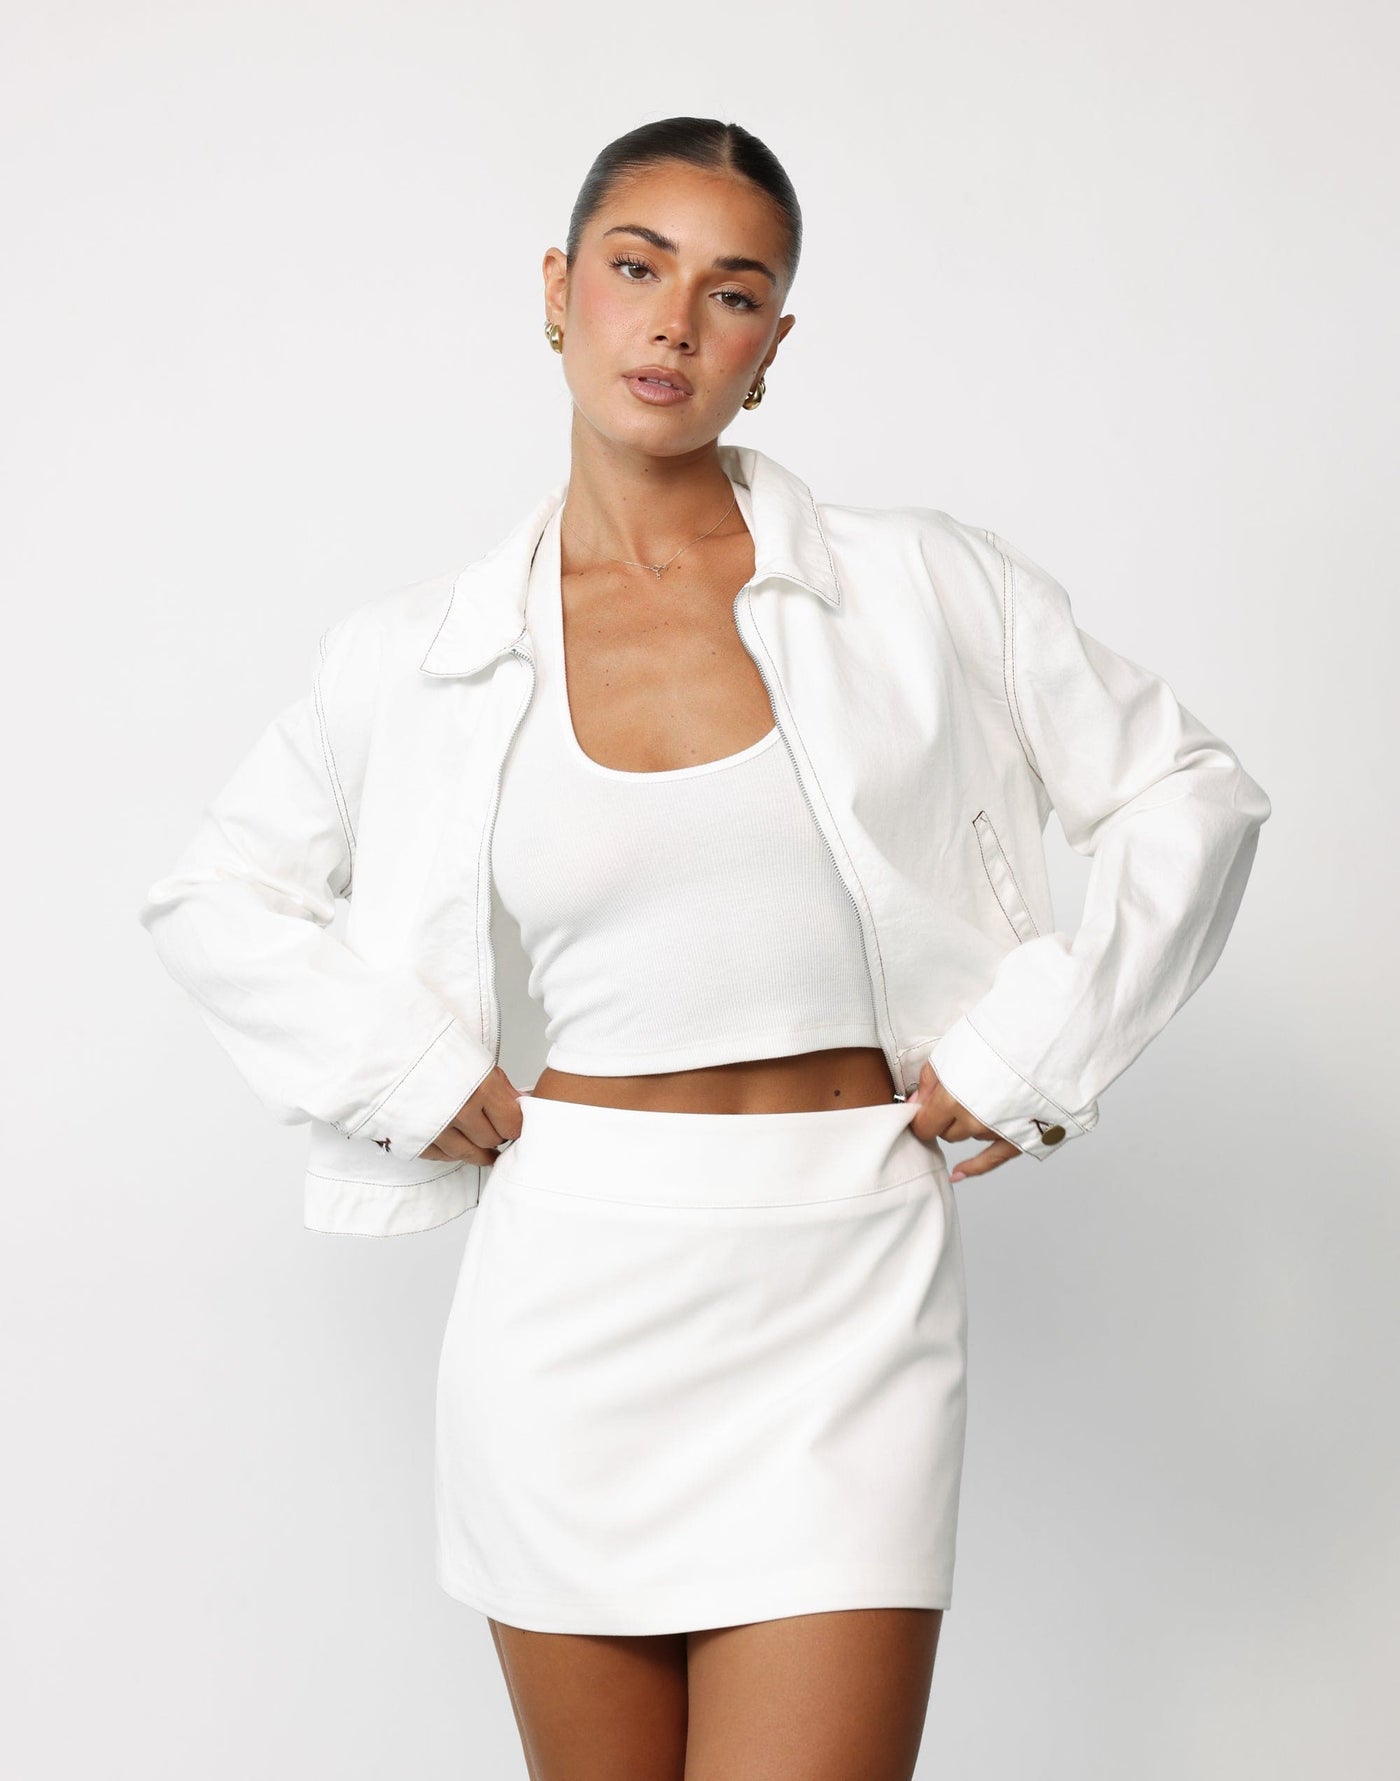 Riya Jacket (White) - Cropped Zip Up Jacket - Women's Top - Charcoal Clothing